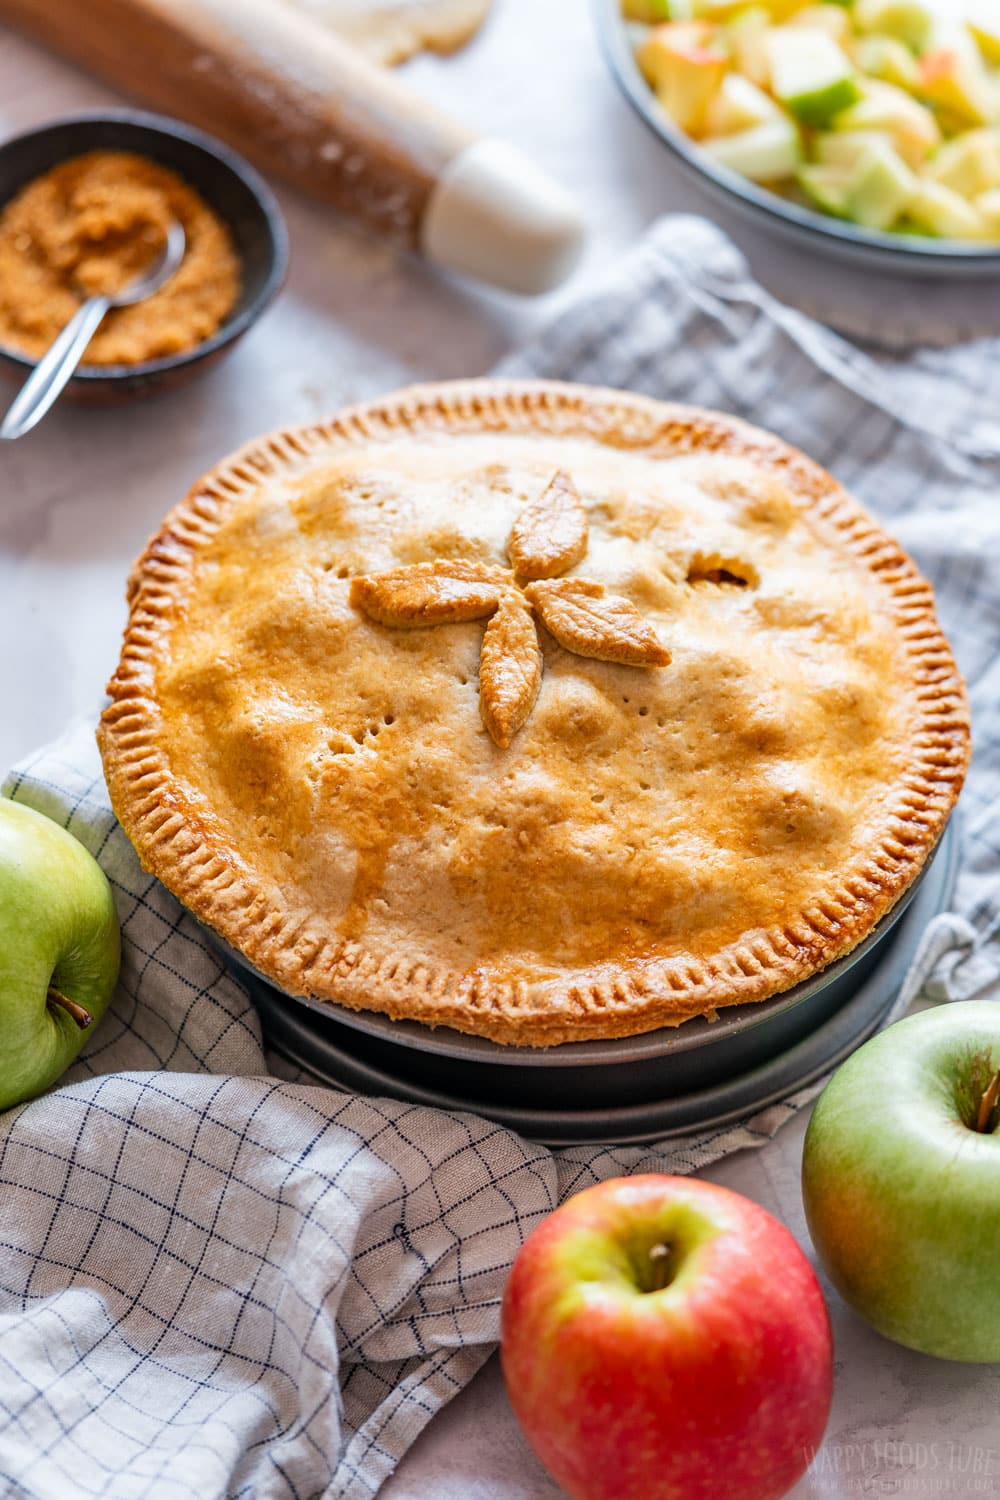 Homemade apple pie with golden crust.